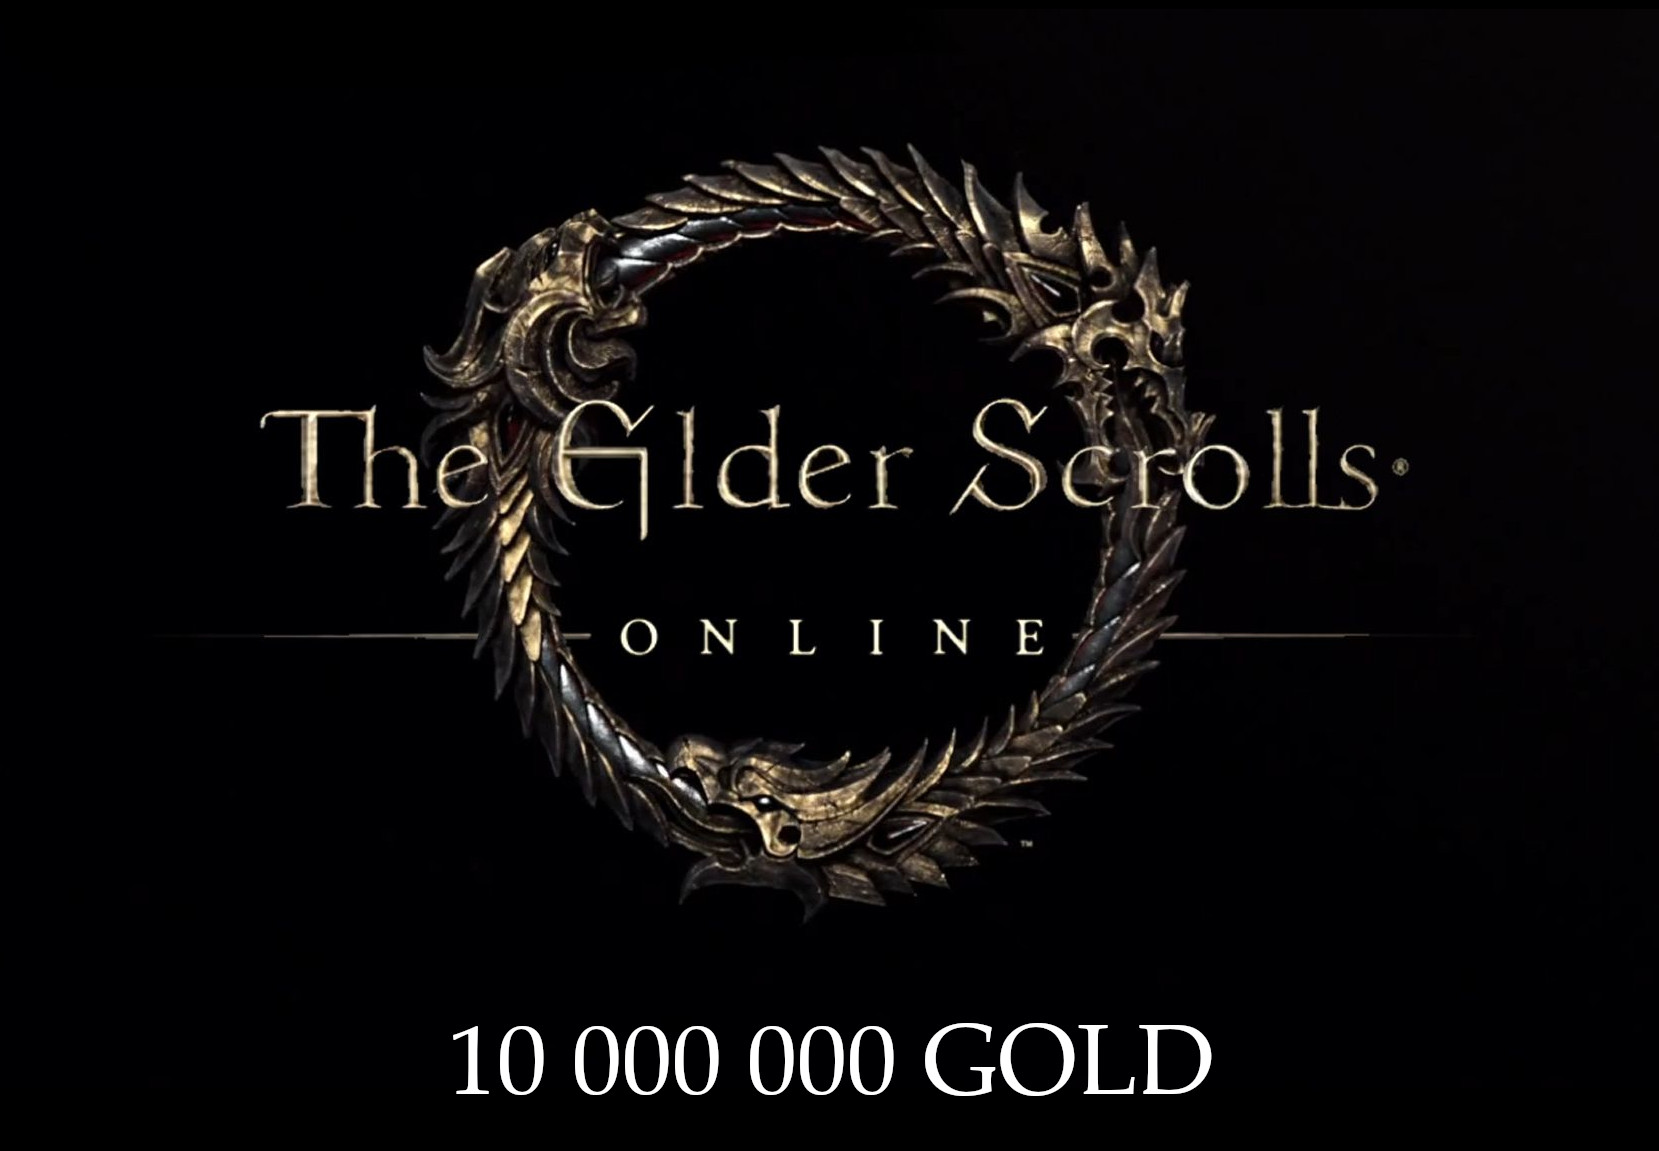 The Elder Scrolls Online - 10000k Gold - NORTH AMERICA PC/MAC